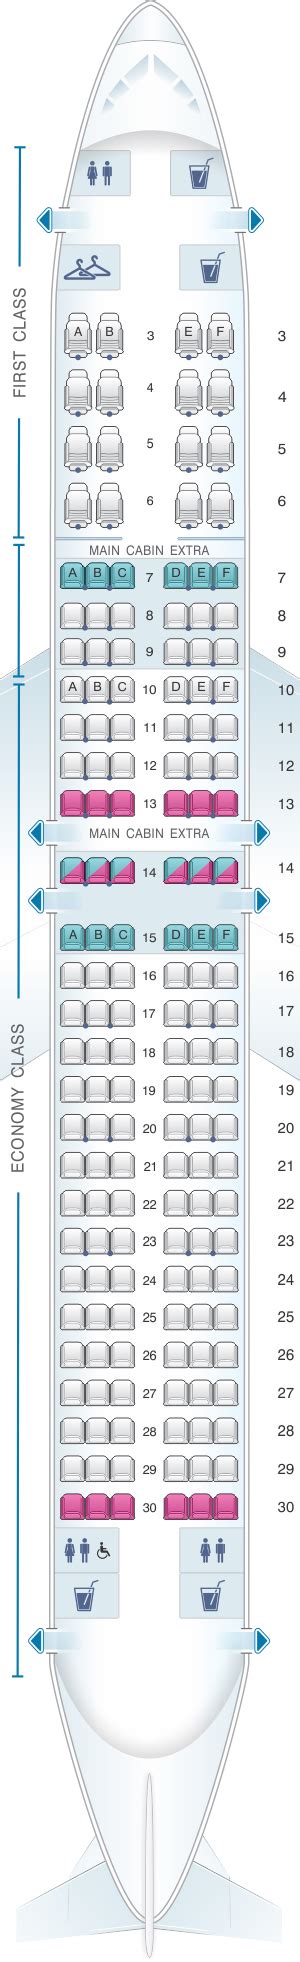 Seat Map Virgin Australia Boeing 737-800 (738) Airpl